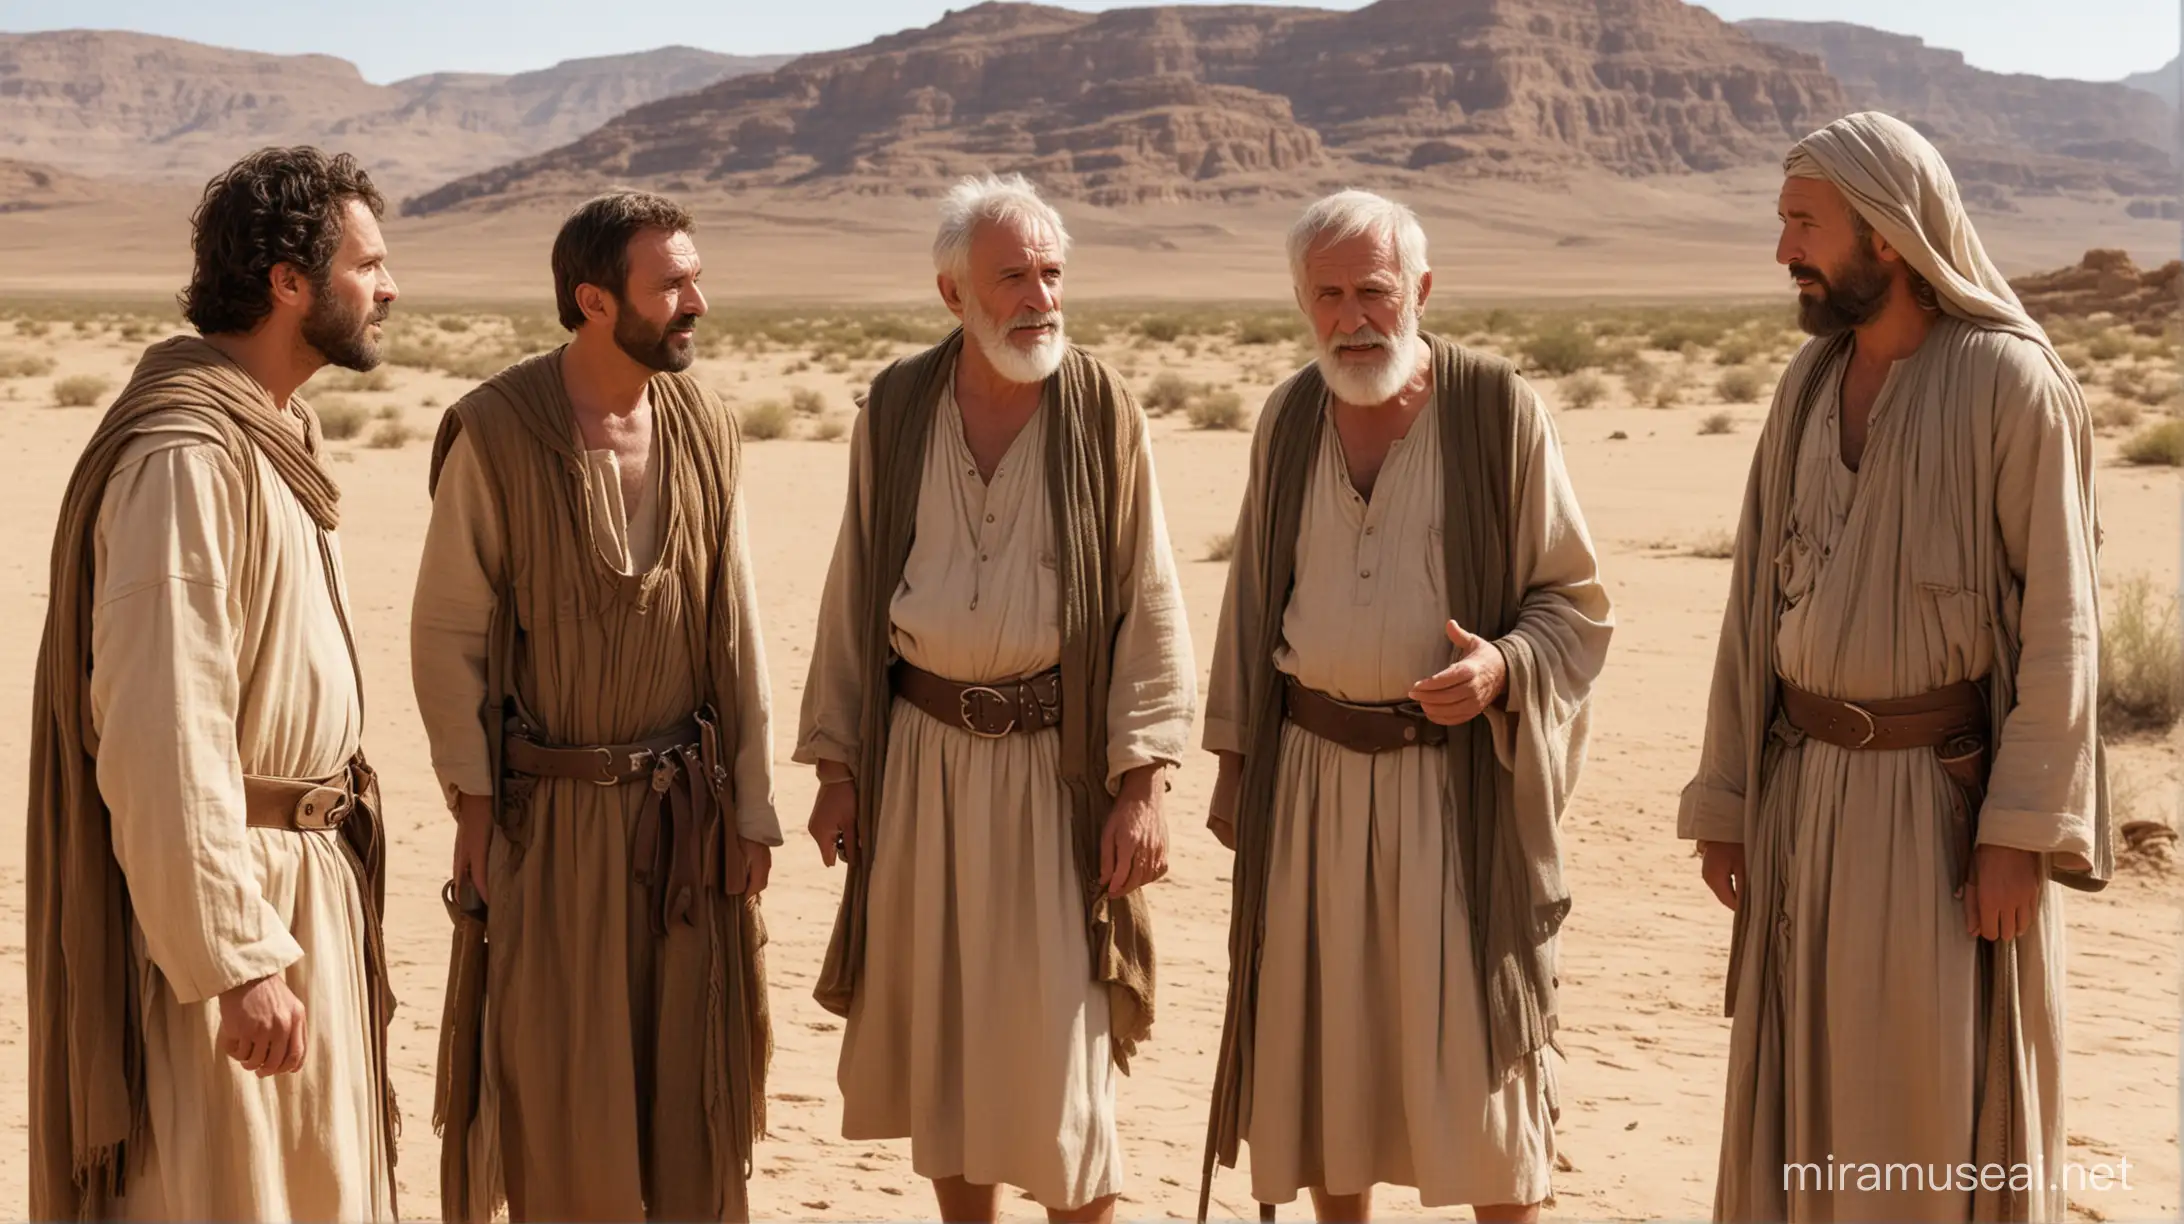 Biblical Scene Three Strong Men Conversing with an Elder in the Desert